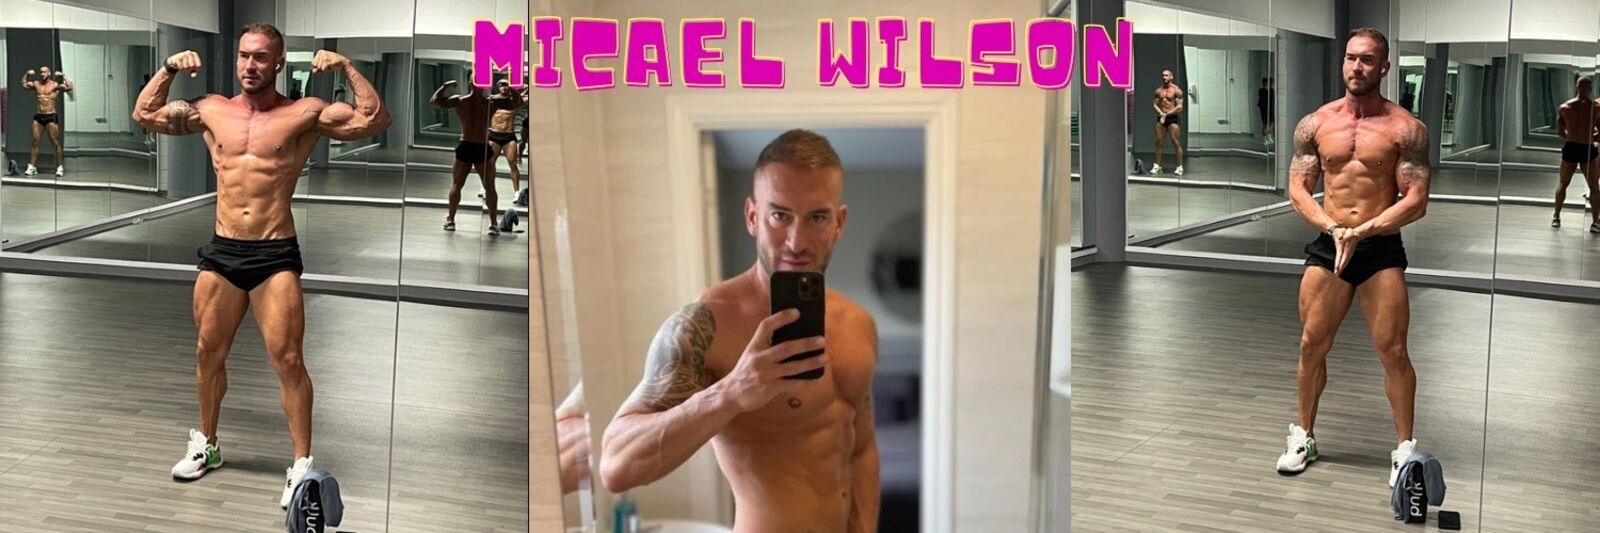 See Micael Wilson profile